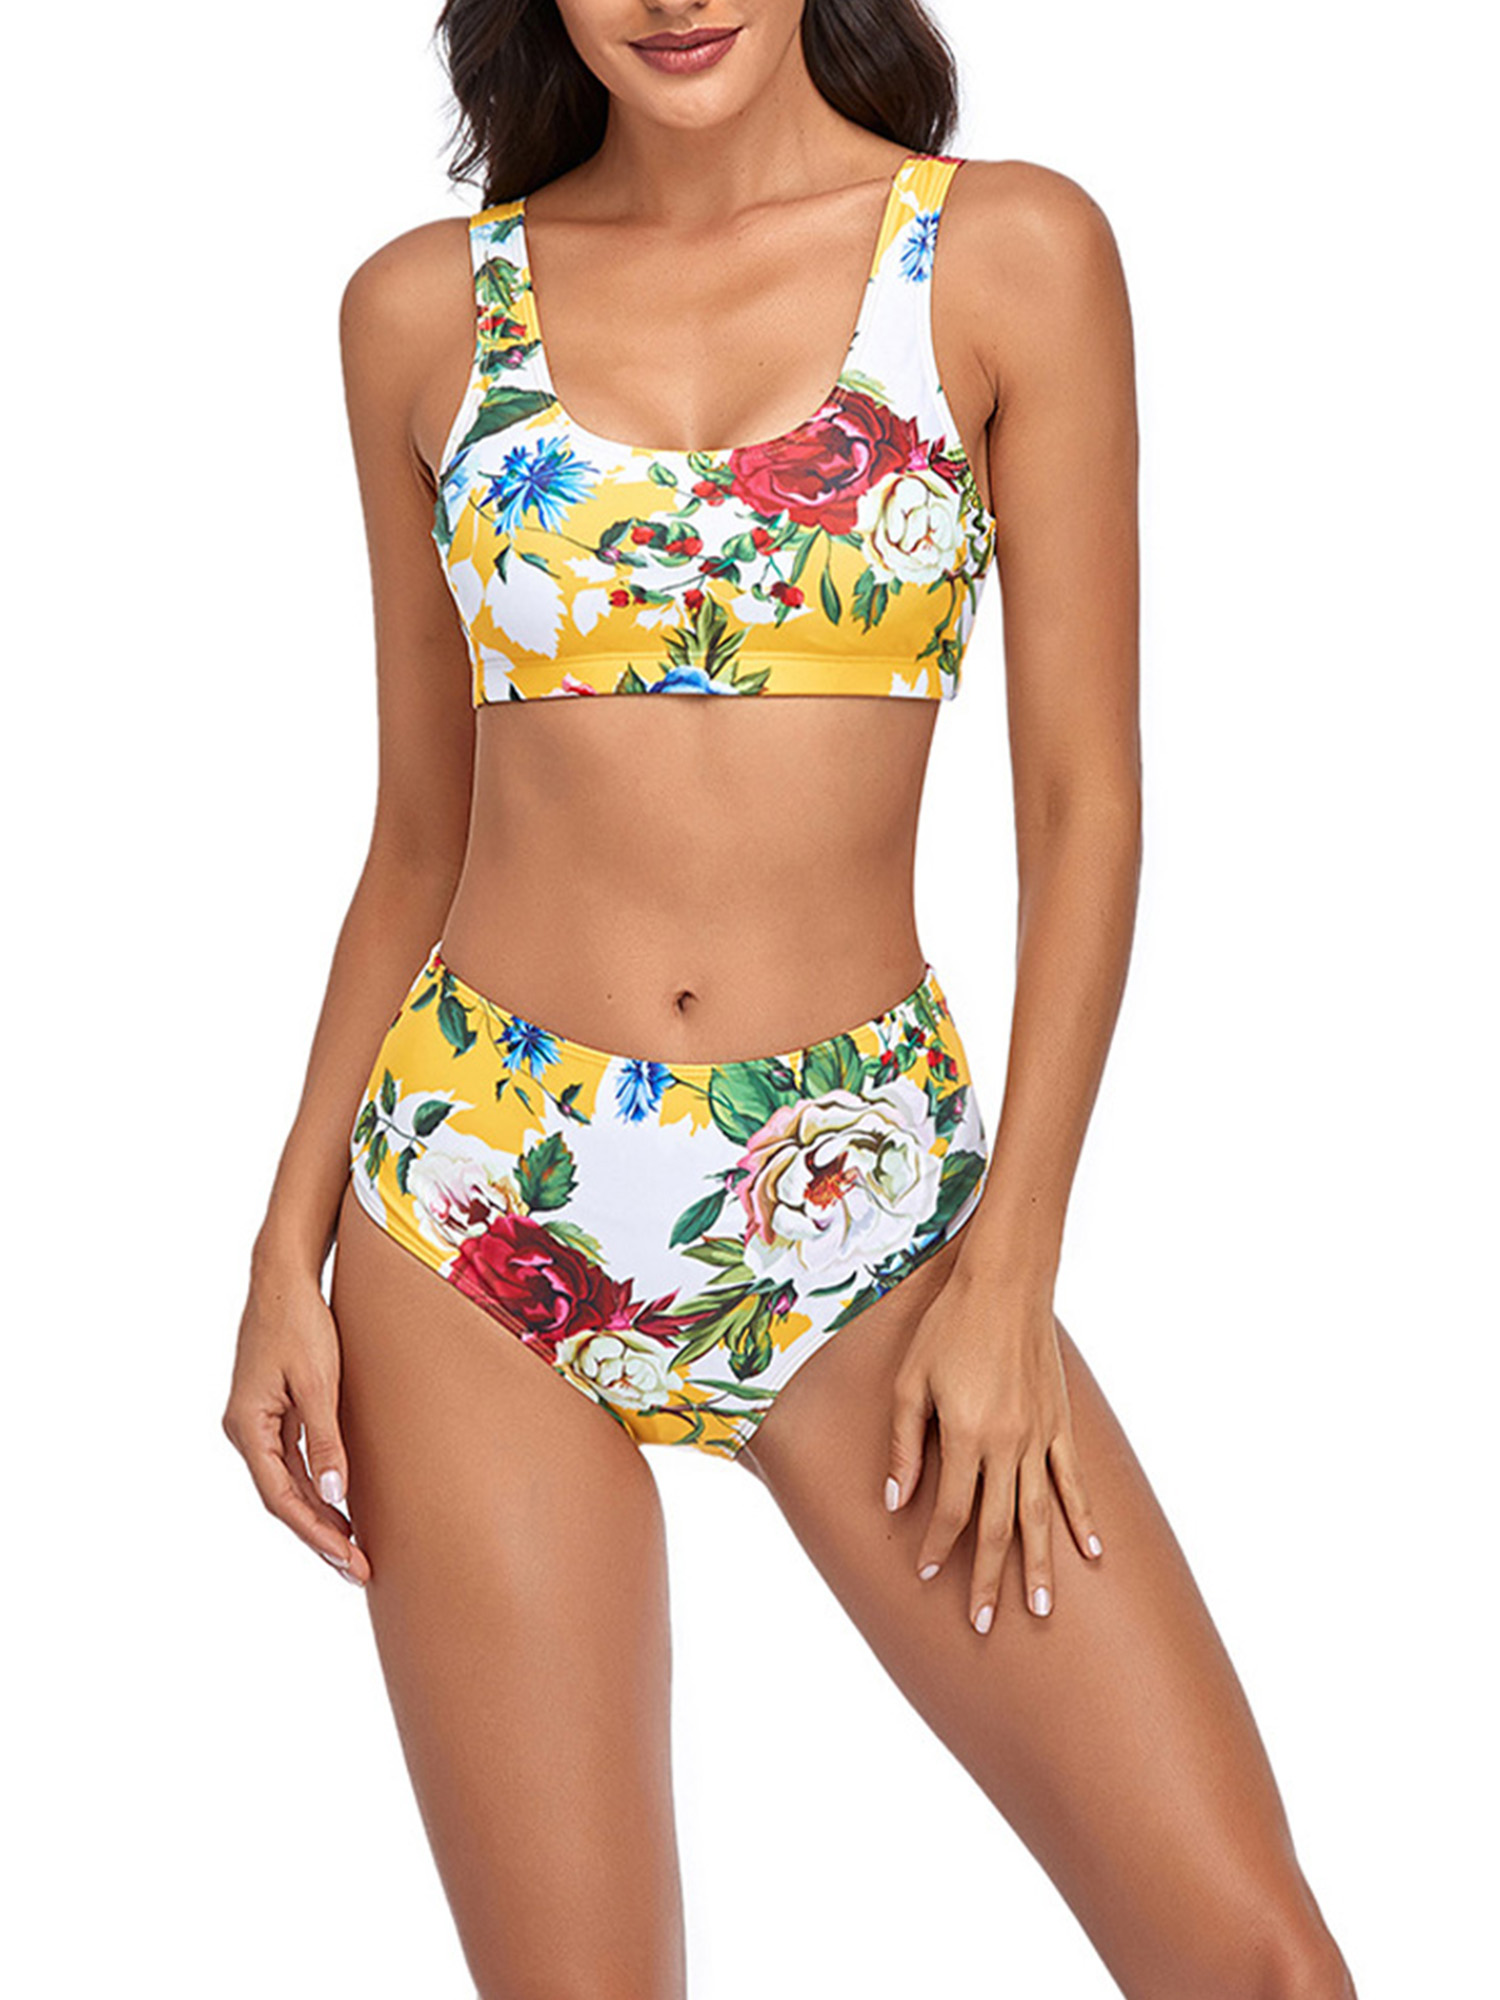 UKAP Push Up Bikini Swimsuits, Womens Floral Swimwear High Waist Tankini Beachwear Bathing Suits Padded Tummy Control S-XL,Two Piece - image 1 of 3